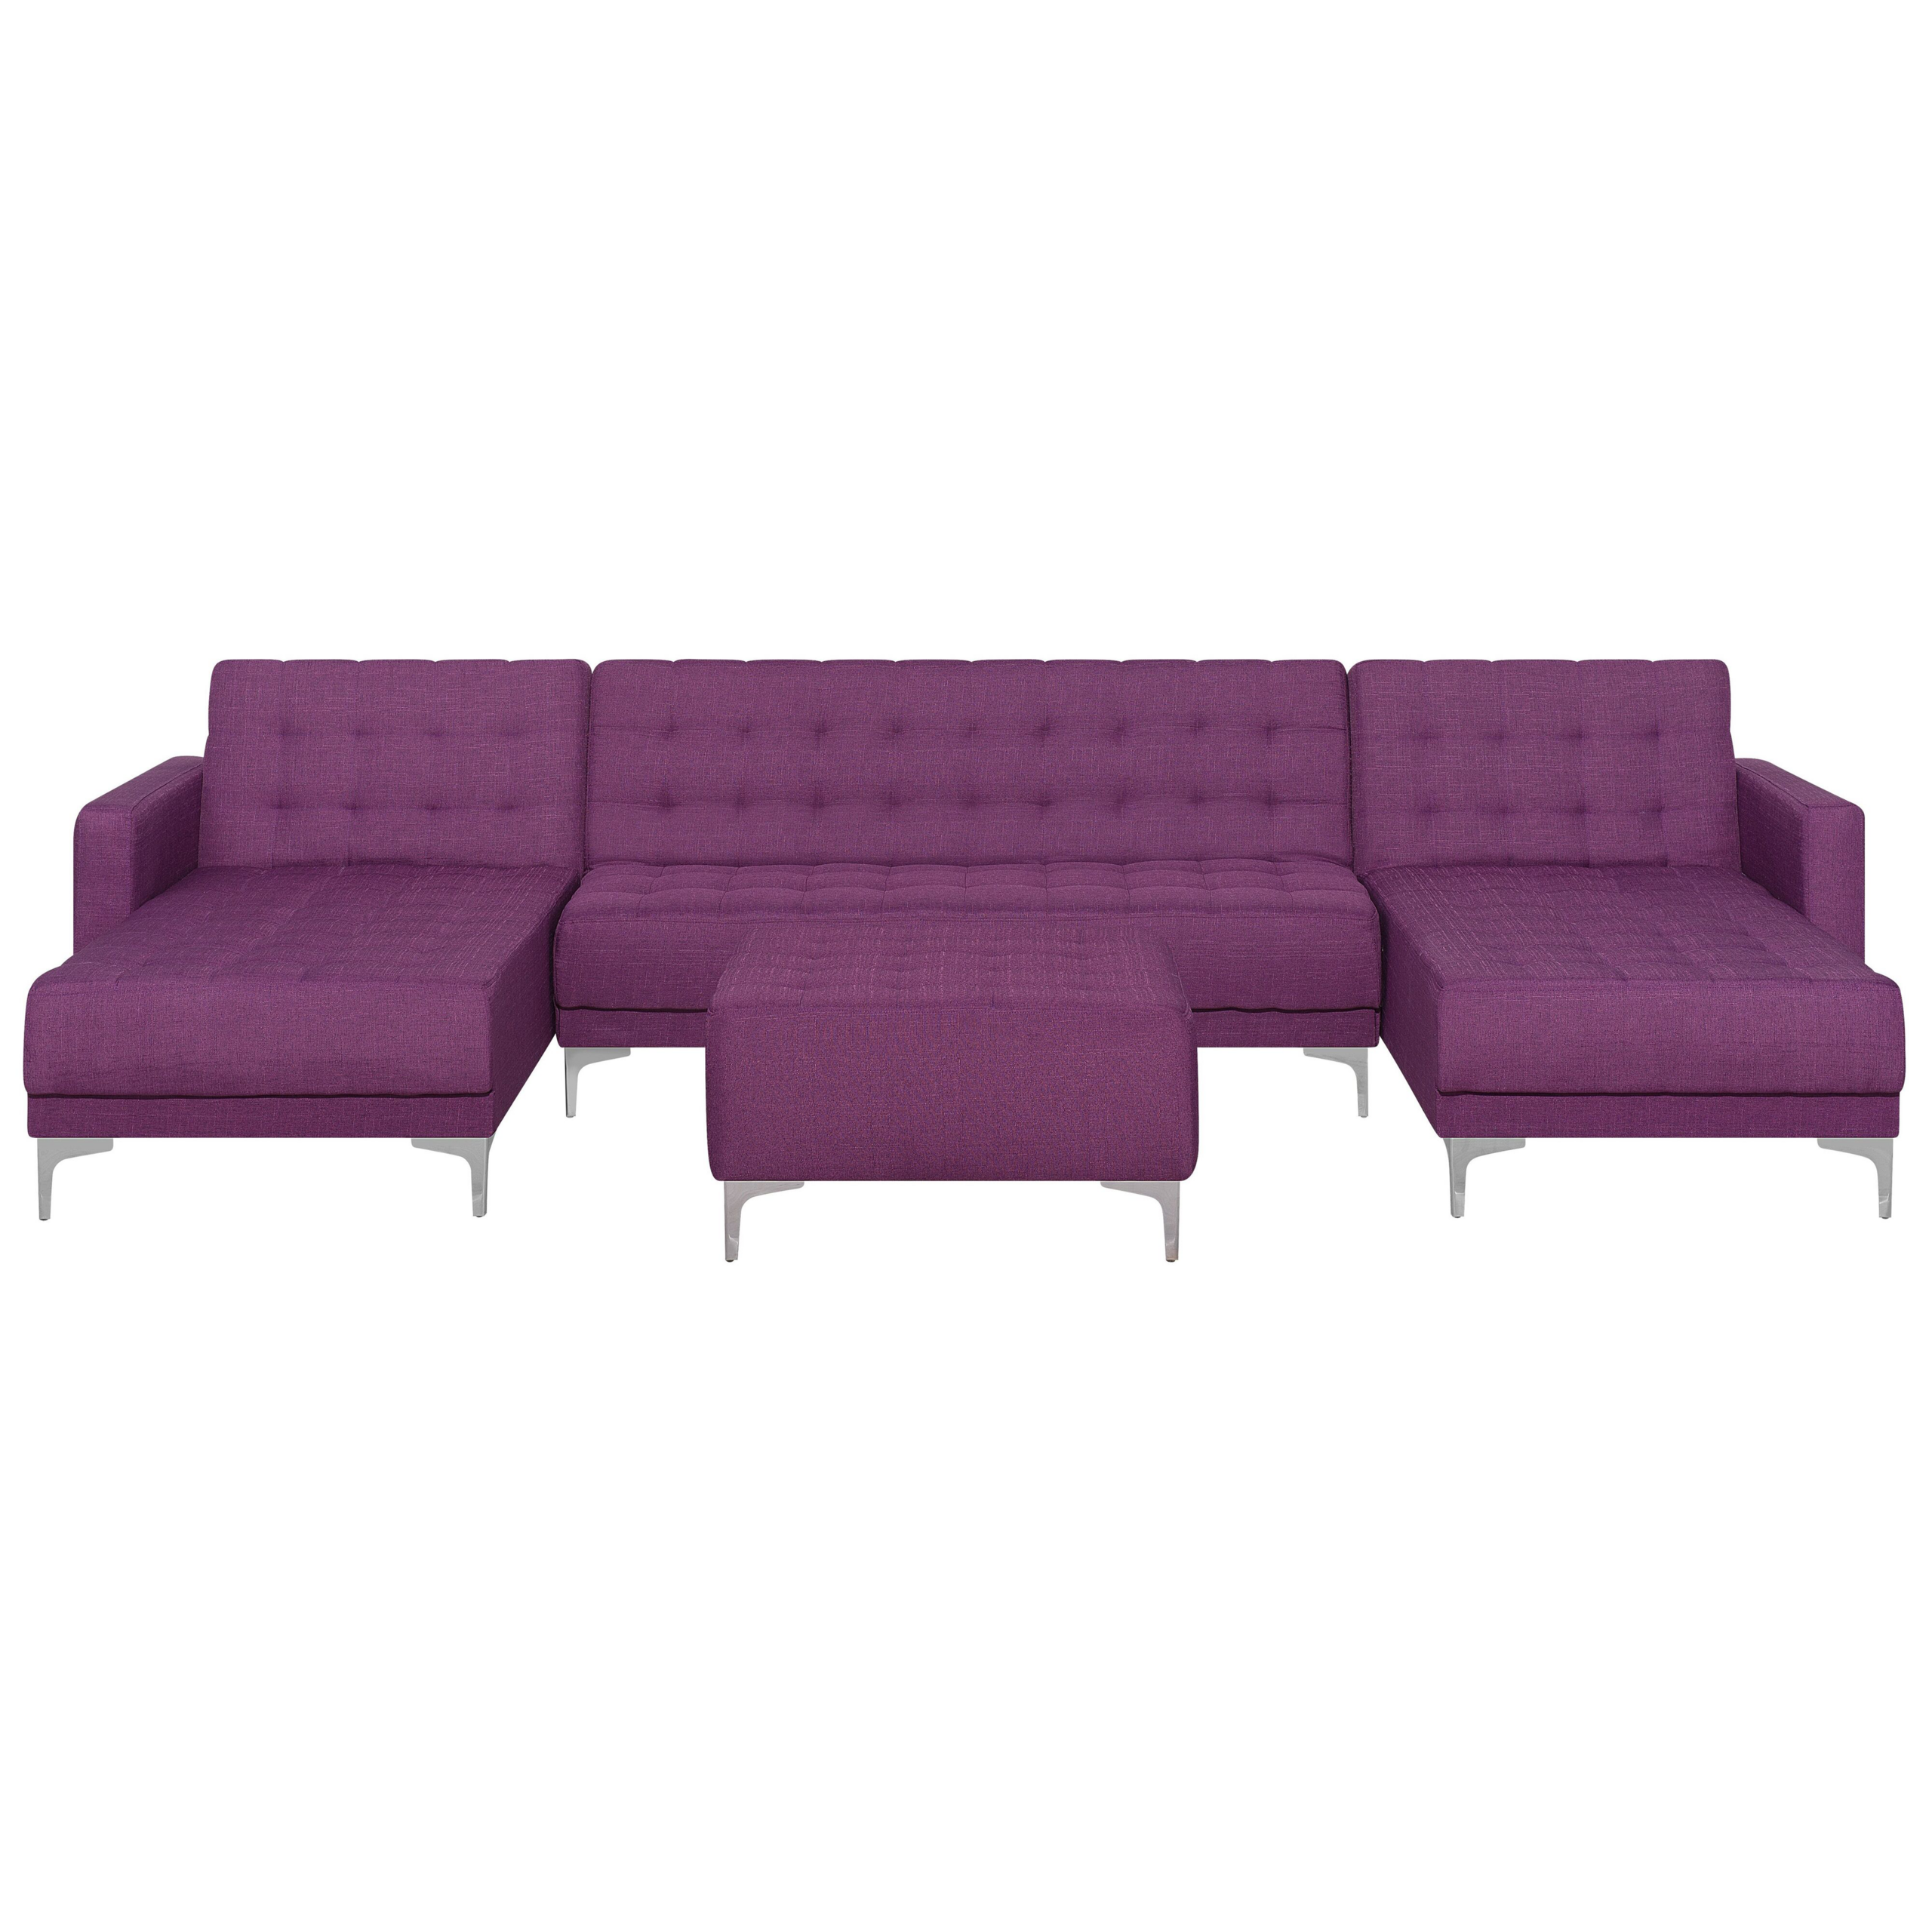 Beliani Corner Sofa Purple Tufted Fabric Modern U-Shaped Modular 5 Seater with Ottoman Chaise Longues